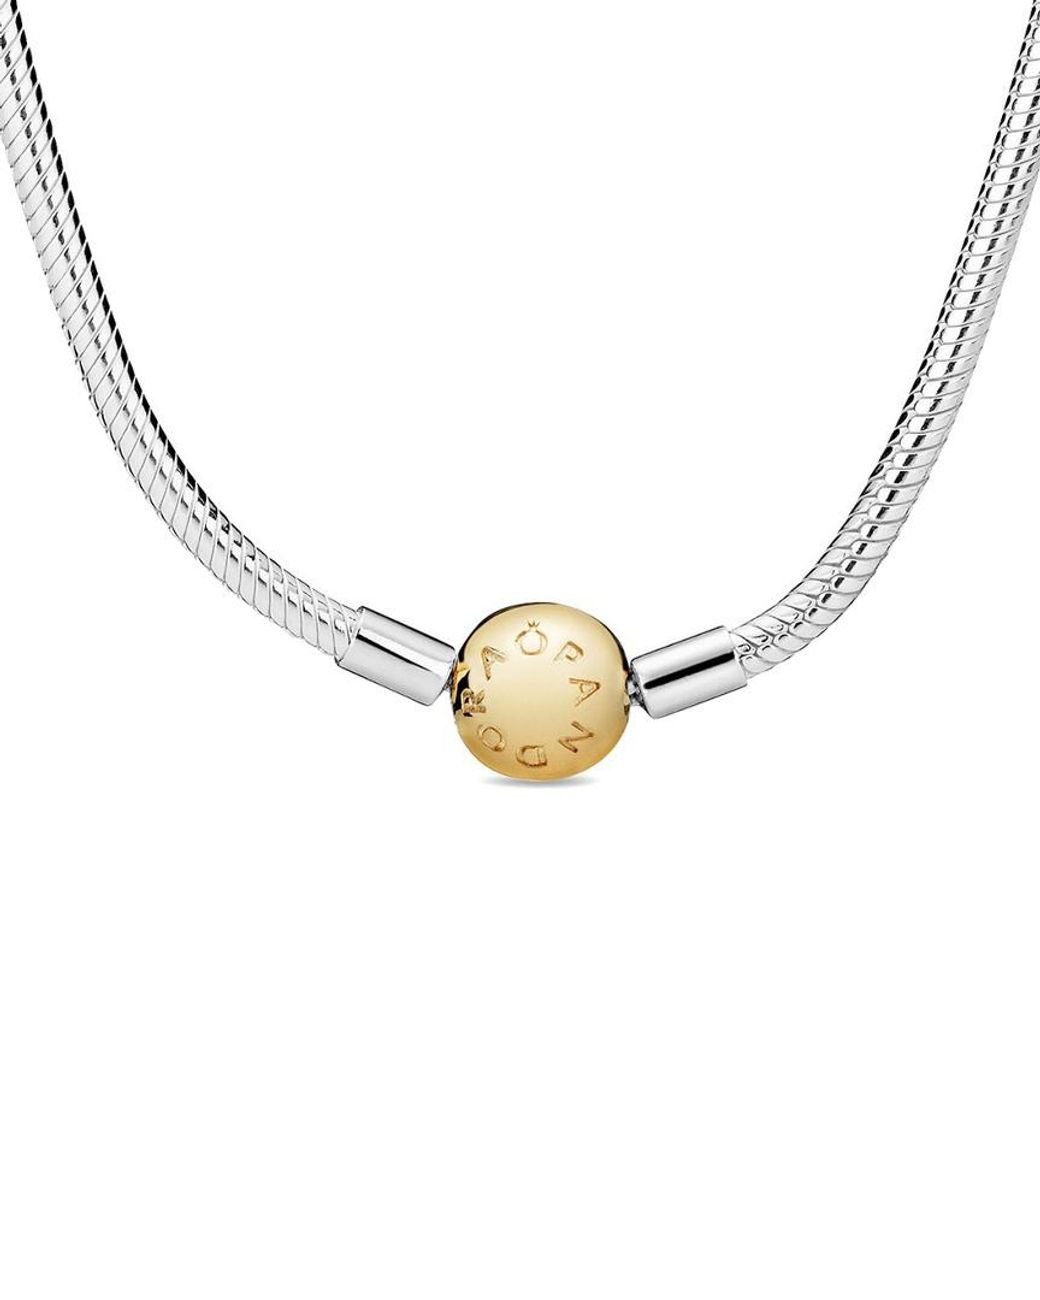 NEW 100% Authentic PANDORA 925 Silver Logo Link Chain Necklace 399410C00 |  eBay